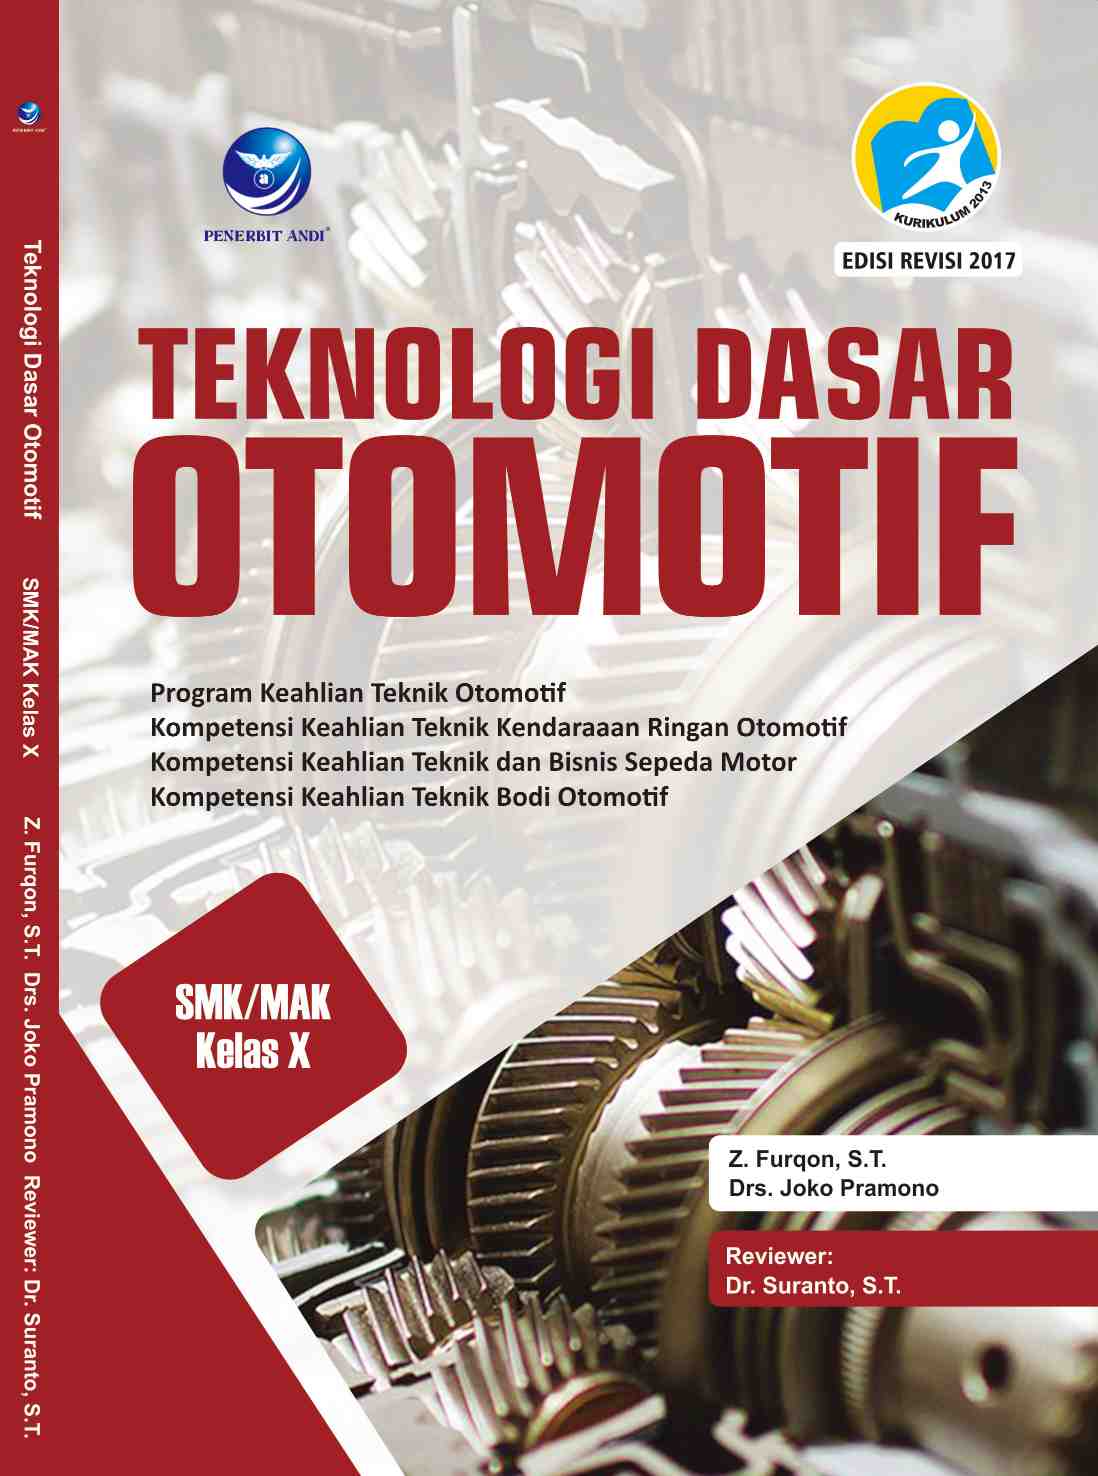 Teknologi Dasar Otomotif SMK X. Program Keahlian Teknik Otomotif